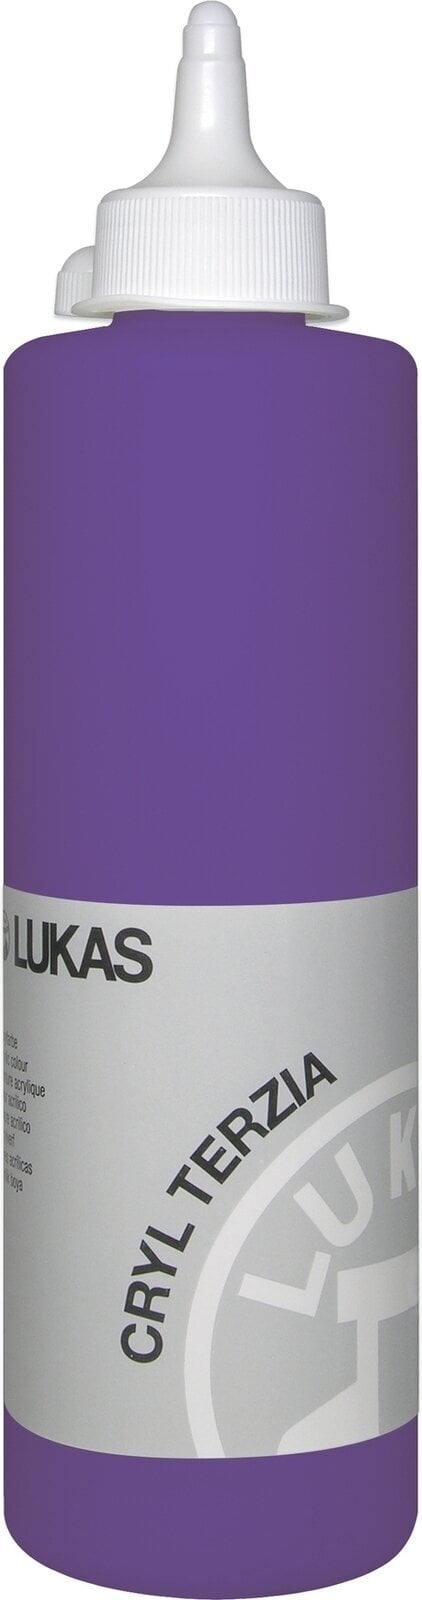 Akrylová farba Lukas Cryl Terzia Acrylic Paint Plastic Bottle Akrylová farba Cobalt Violet Deep Hue 500 ml 1 ks